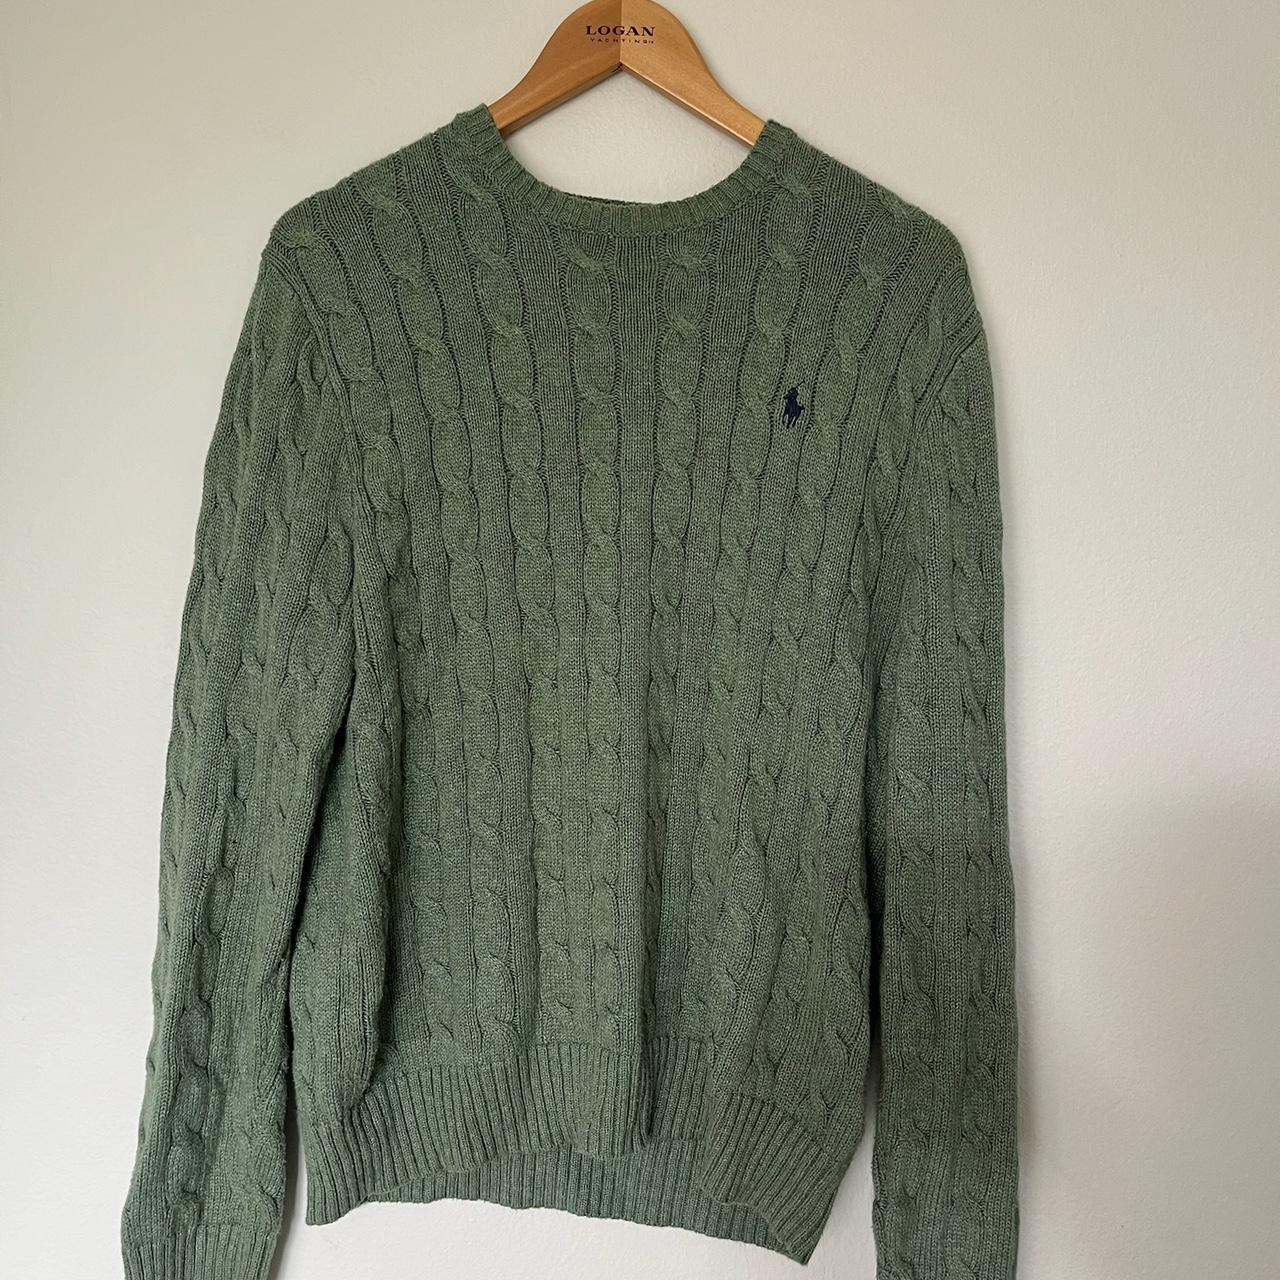 Polo ralph lauren cable knit sweater Size: M... - Depop